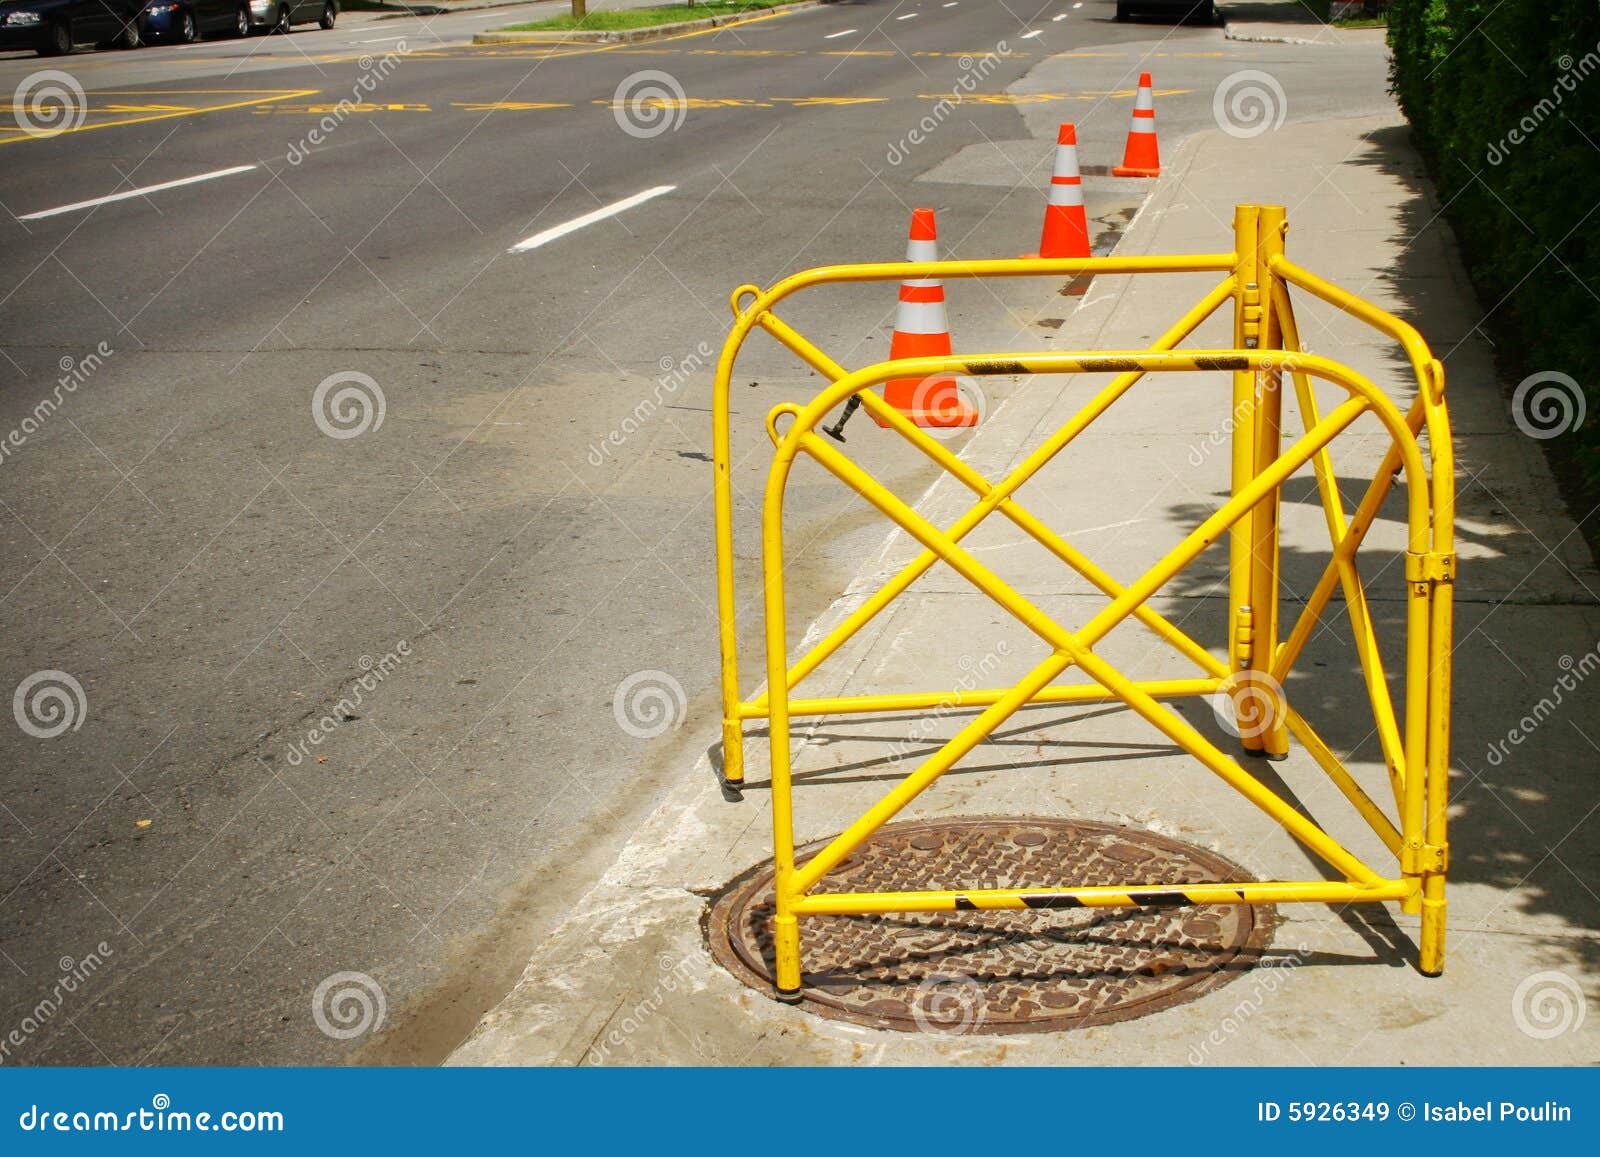 safety-barrier-manhole-5926349.jpg